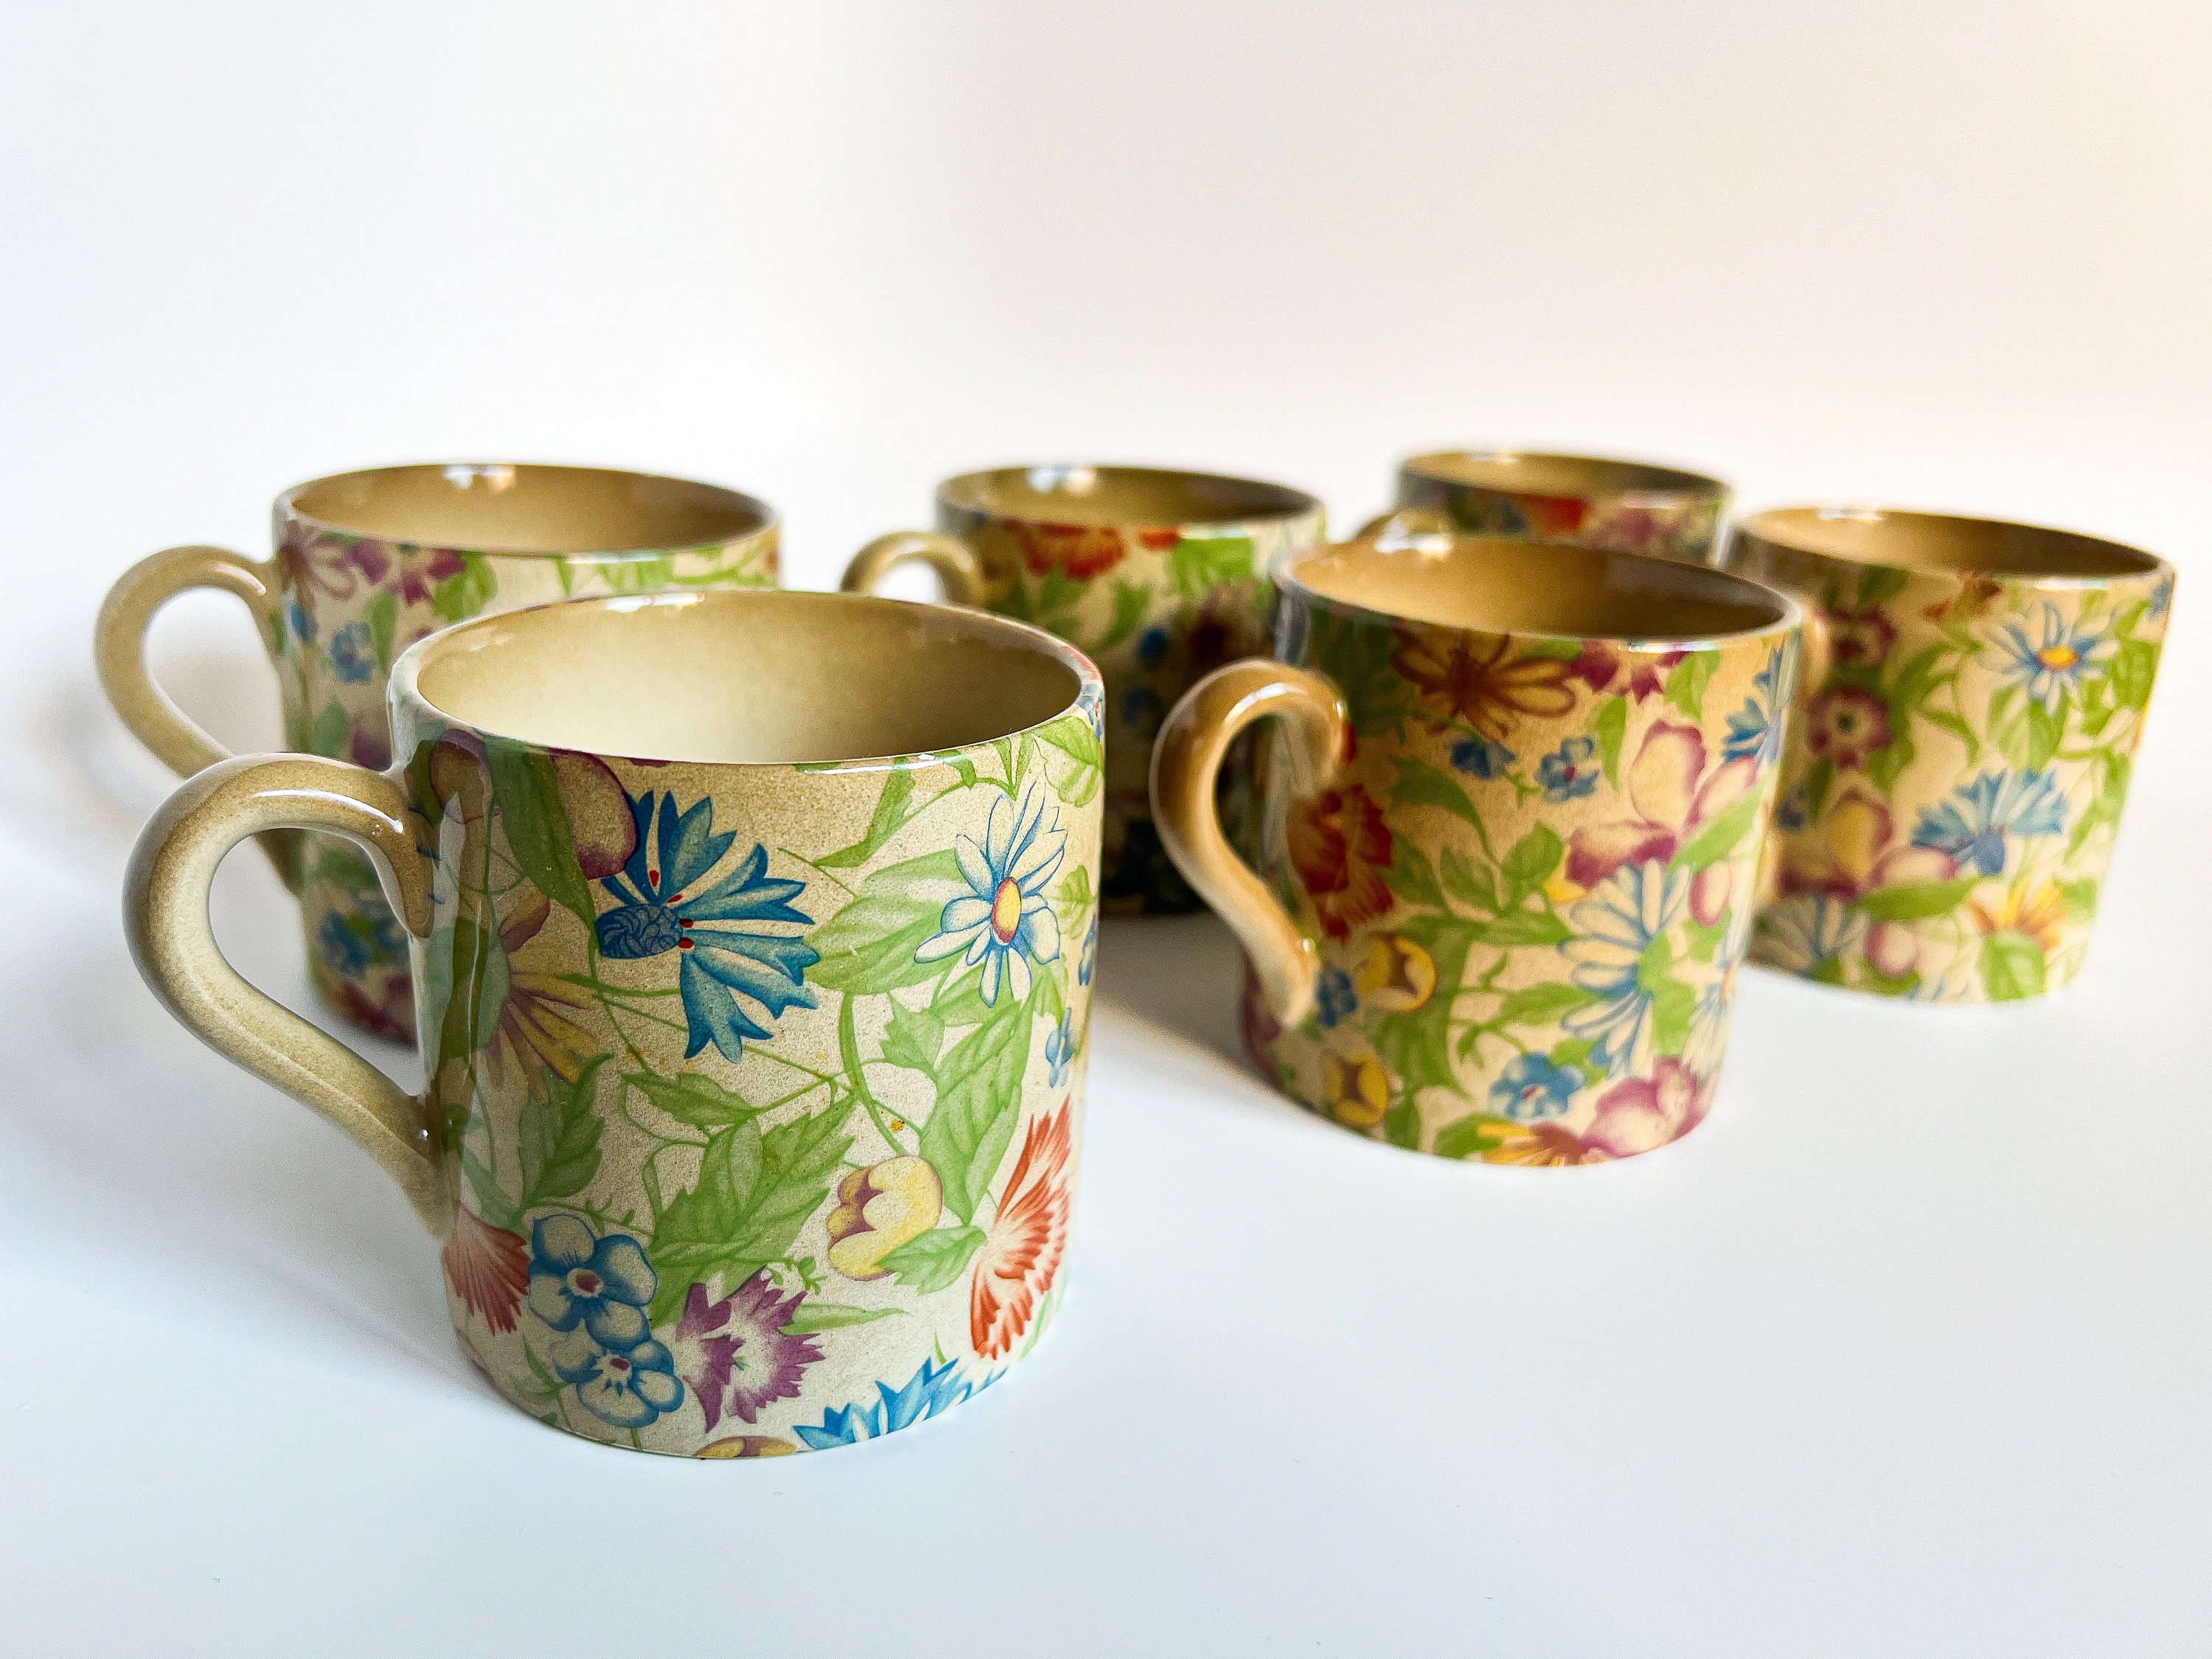 Le Creuset Stoneware Botanique Collection Espresso Mugs, Set of 4 - Multicolor | Multicolor, 3 2/5 oz.